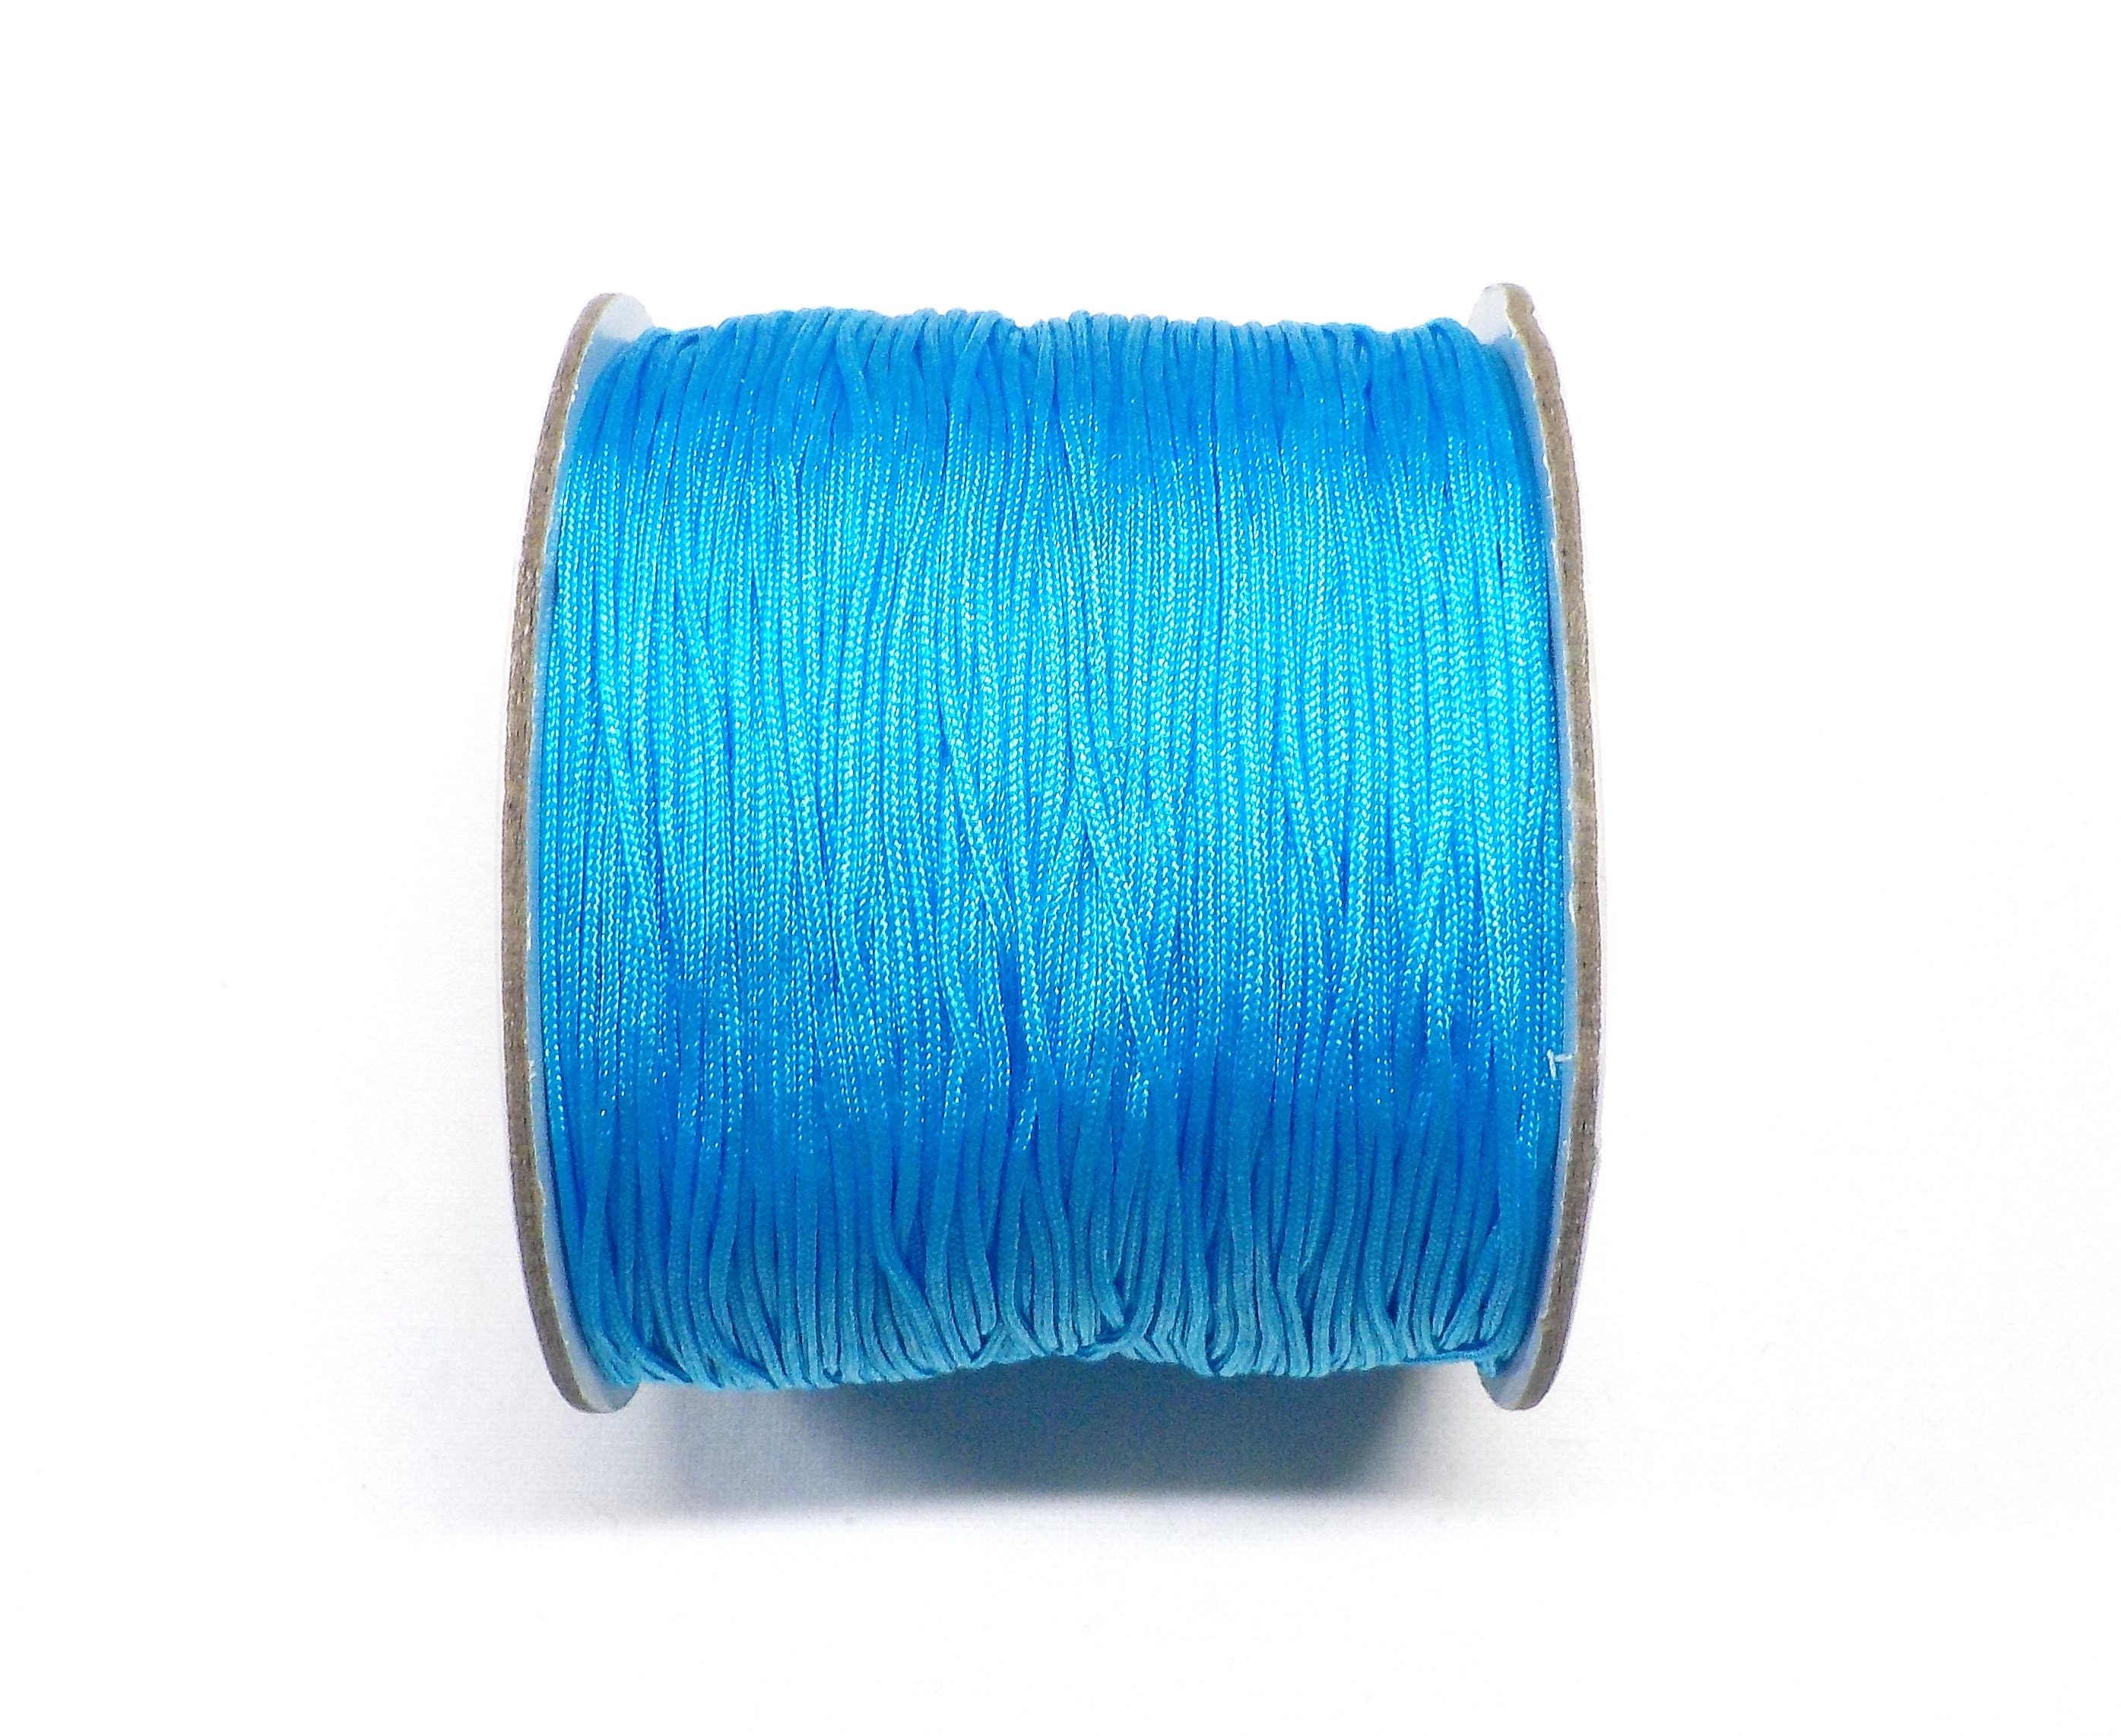 Buy 0.7mm Chinese Knotting Cord, Braided Nylon Cord for Shamballa